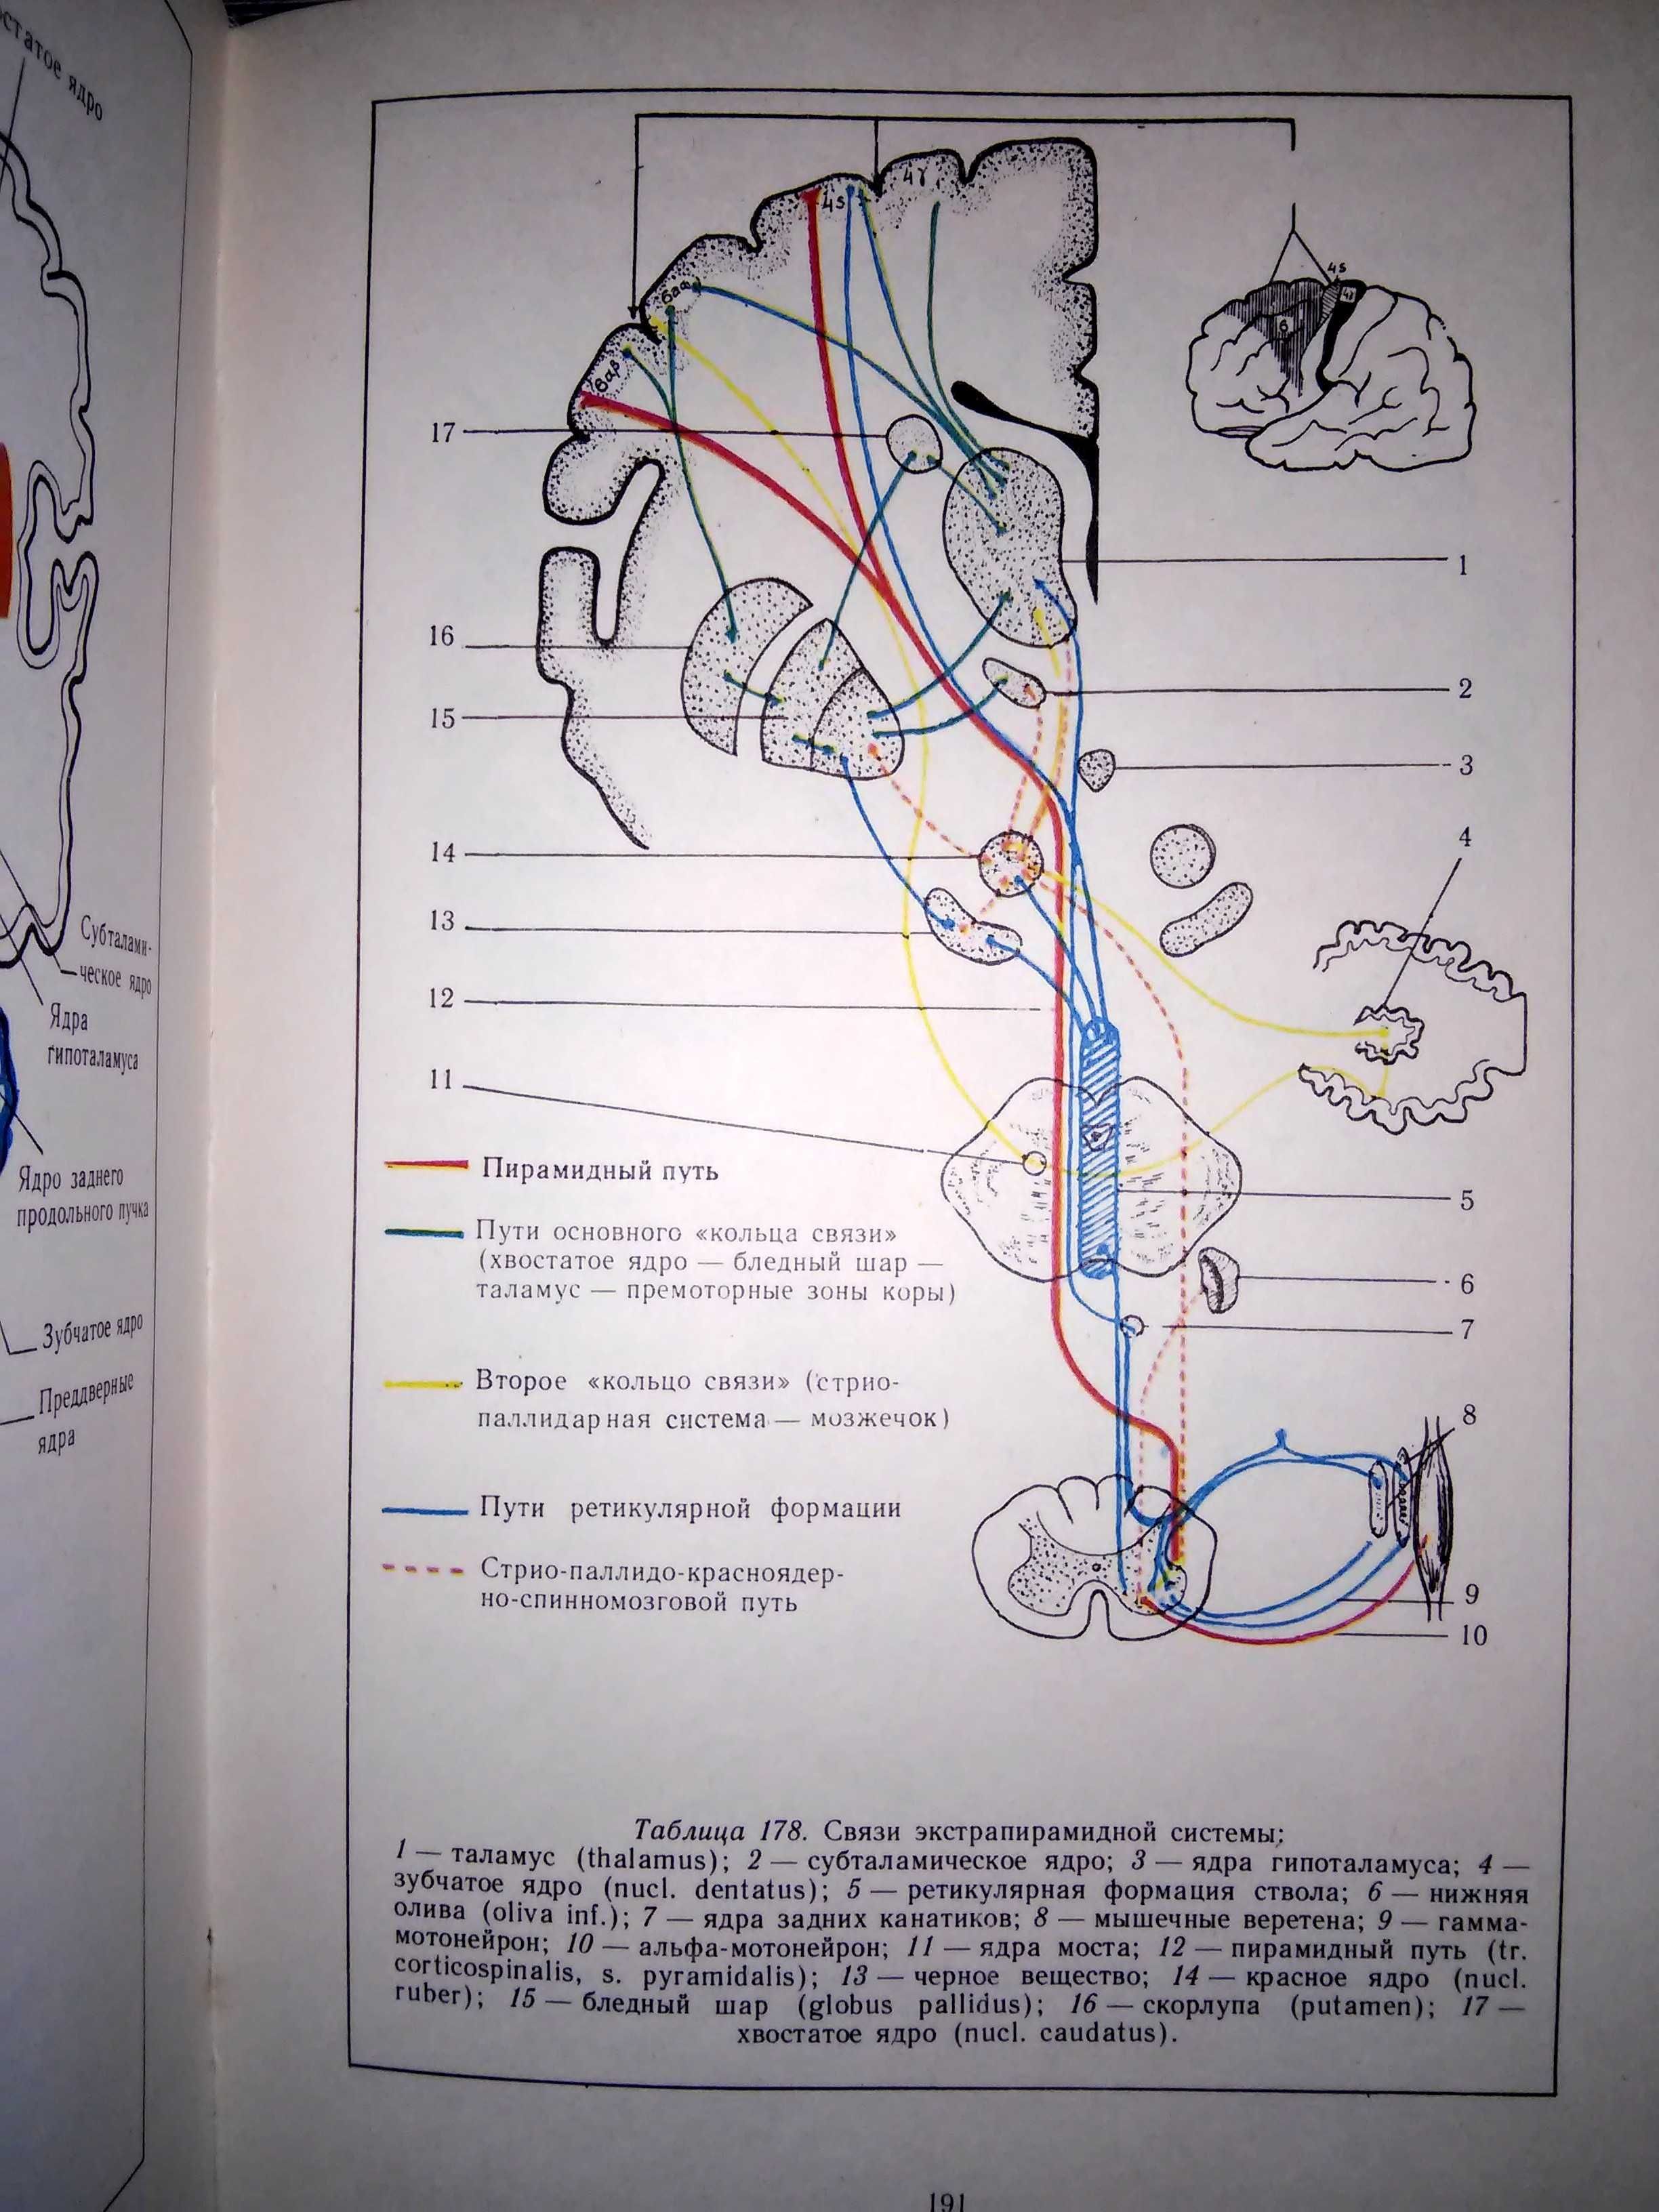 Сандригайло Анатомо-клинический атлас невропатологии 2-е изд. 1988